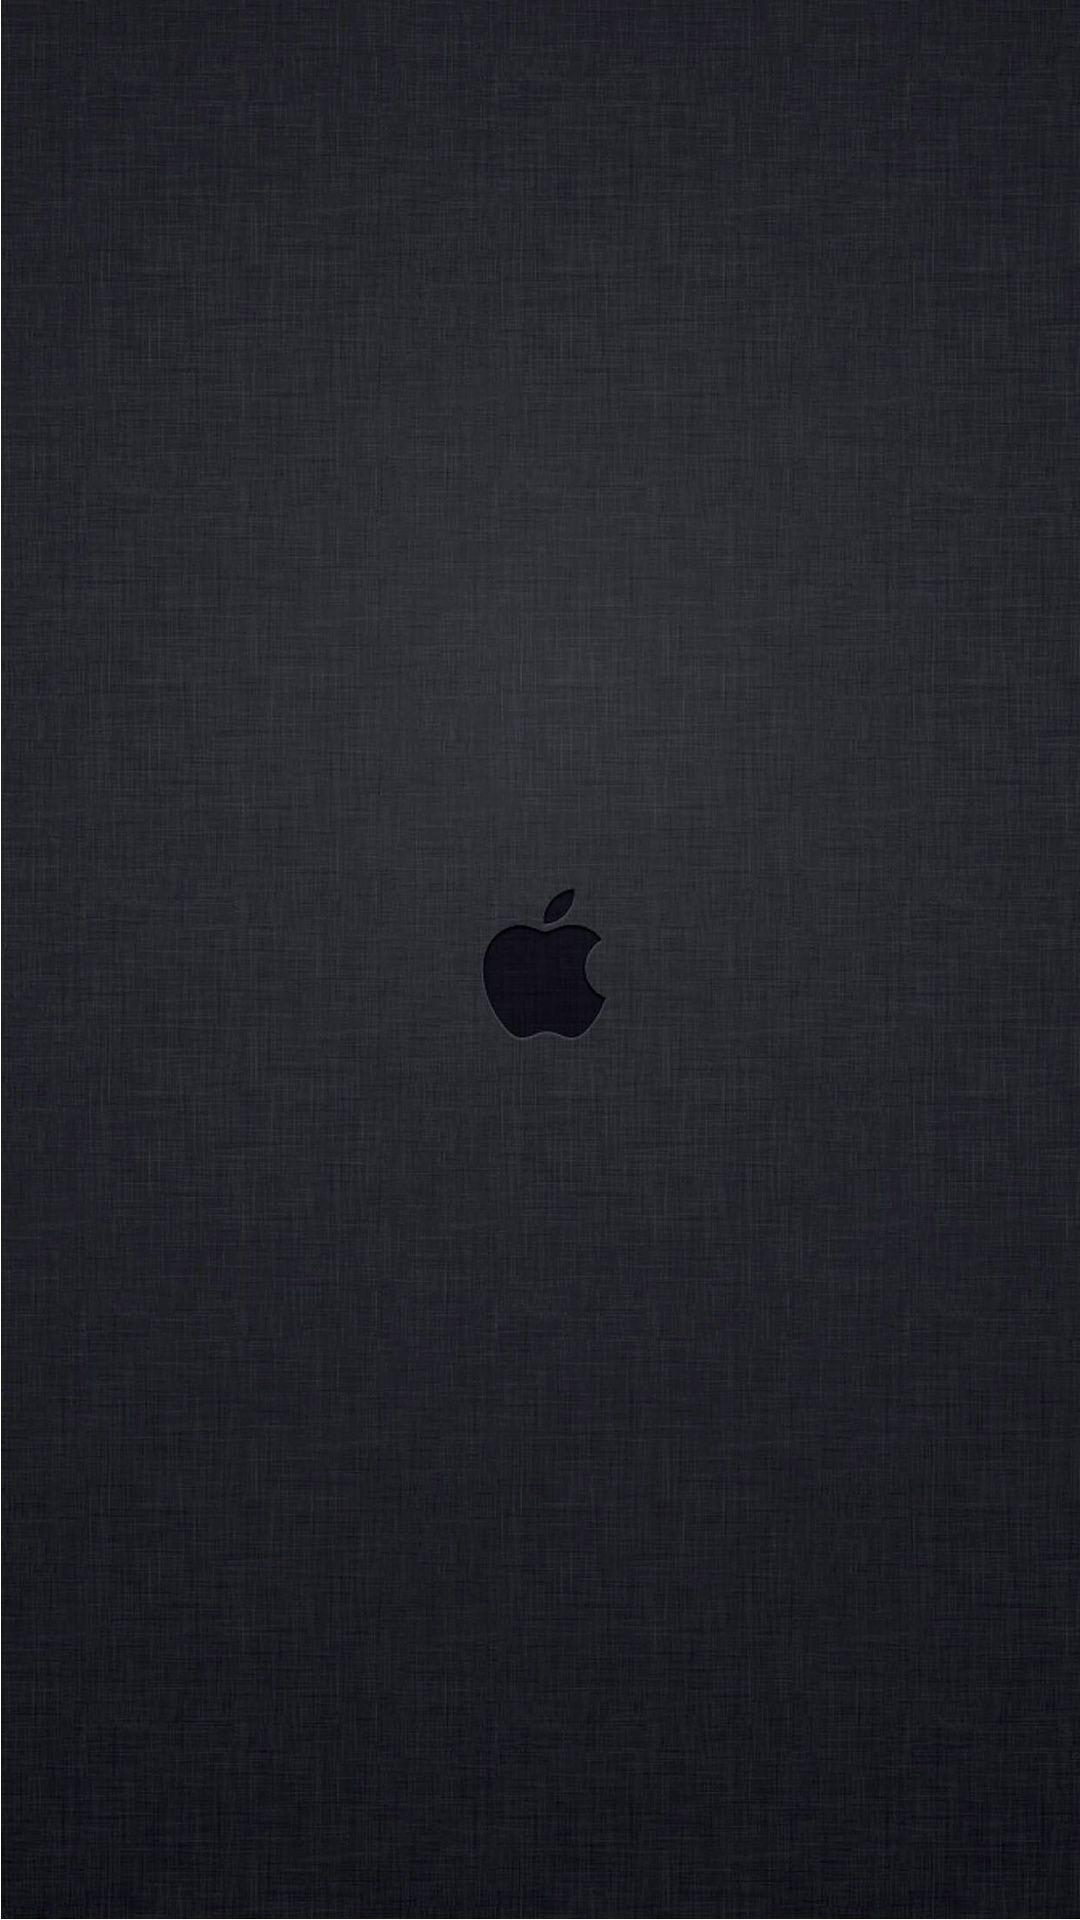 Grey Apple Logo - Best of Macintosh Apple Logo Wallpapers. Tap image for more ...